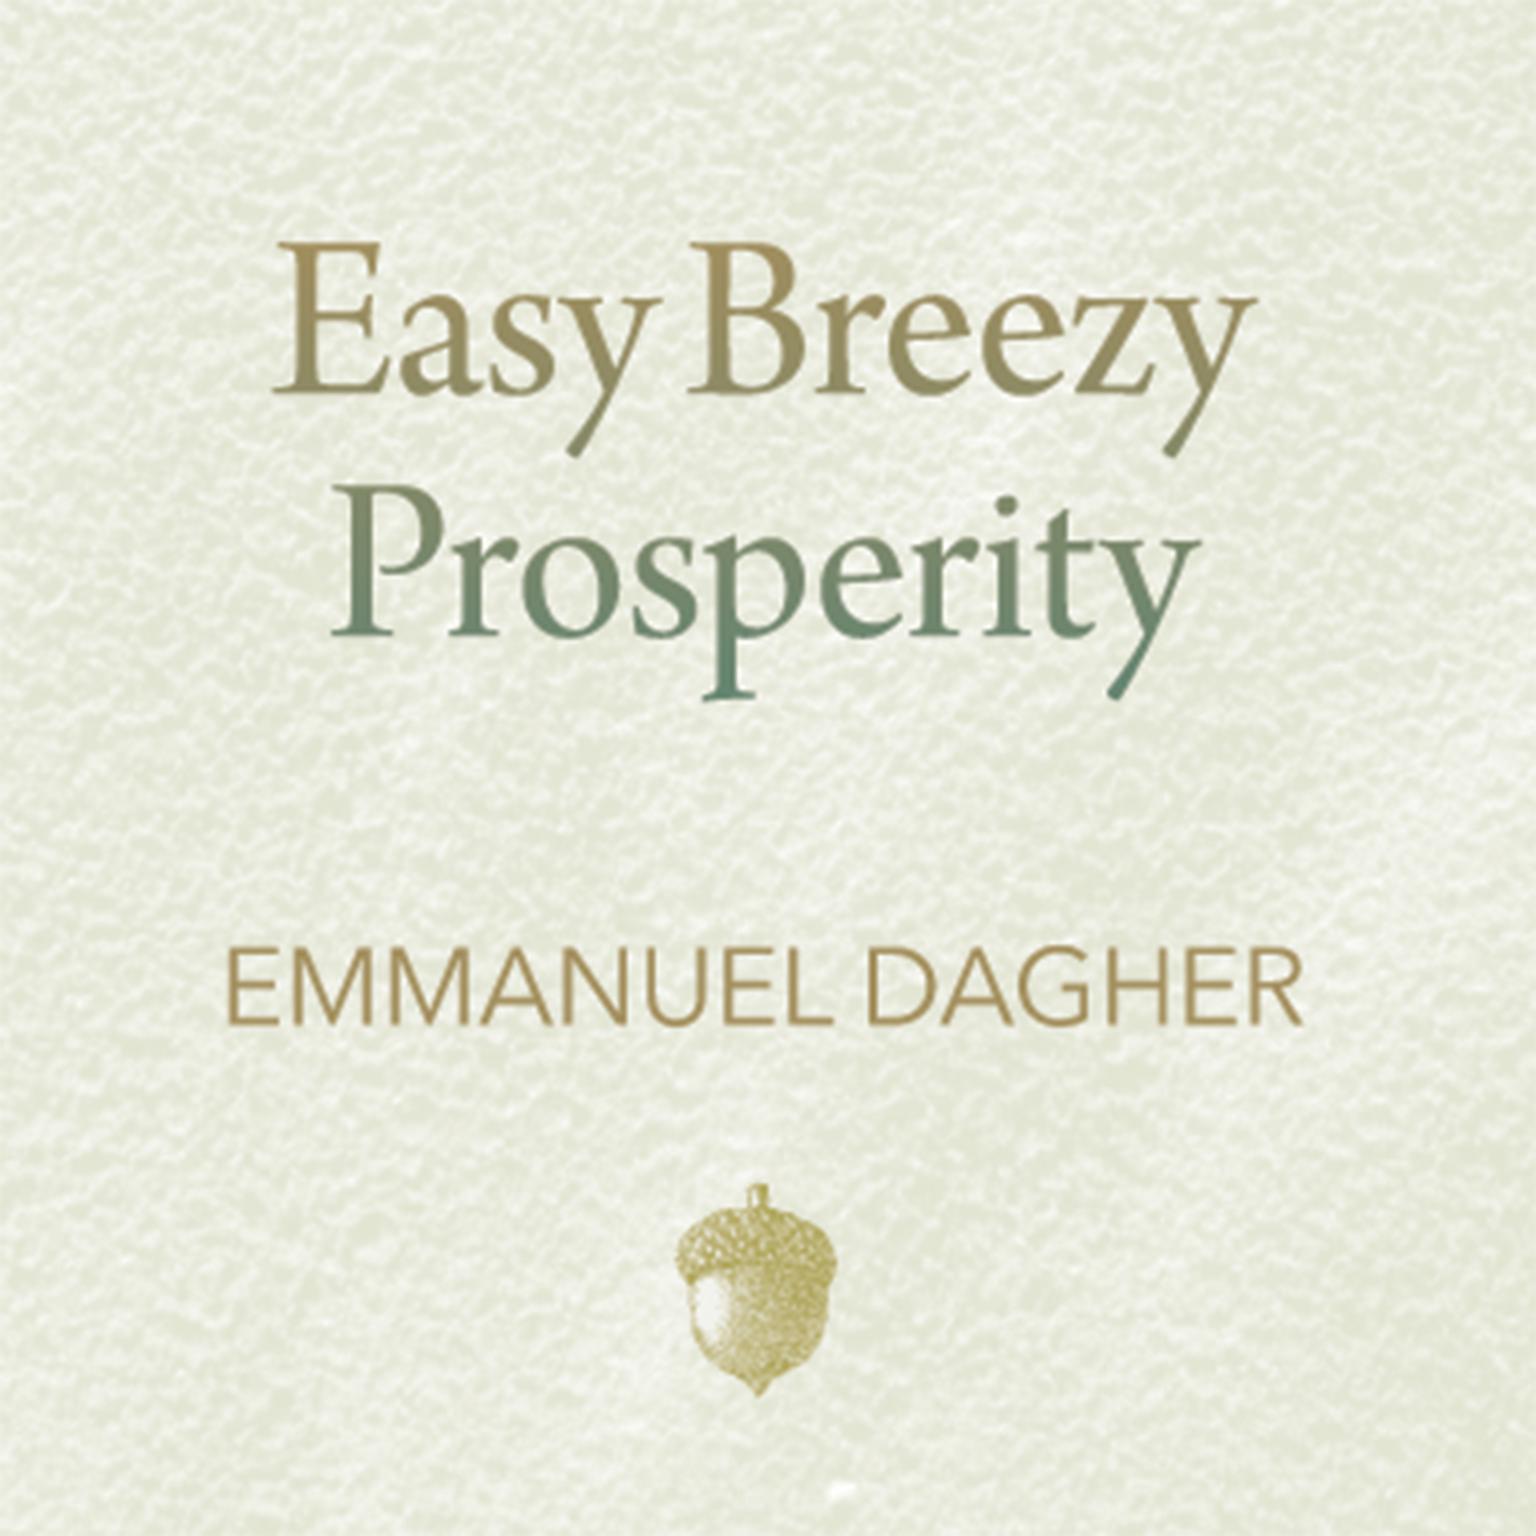 Easy Breezy Prosperity: The Five Foundations for a More Joyful, Abundant Life Audiobook, by Emmanuel Dagher